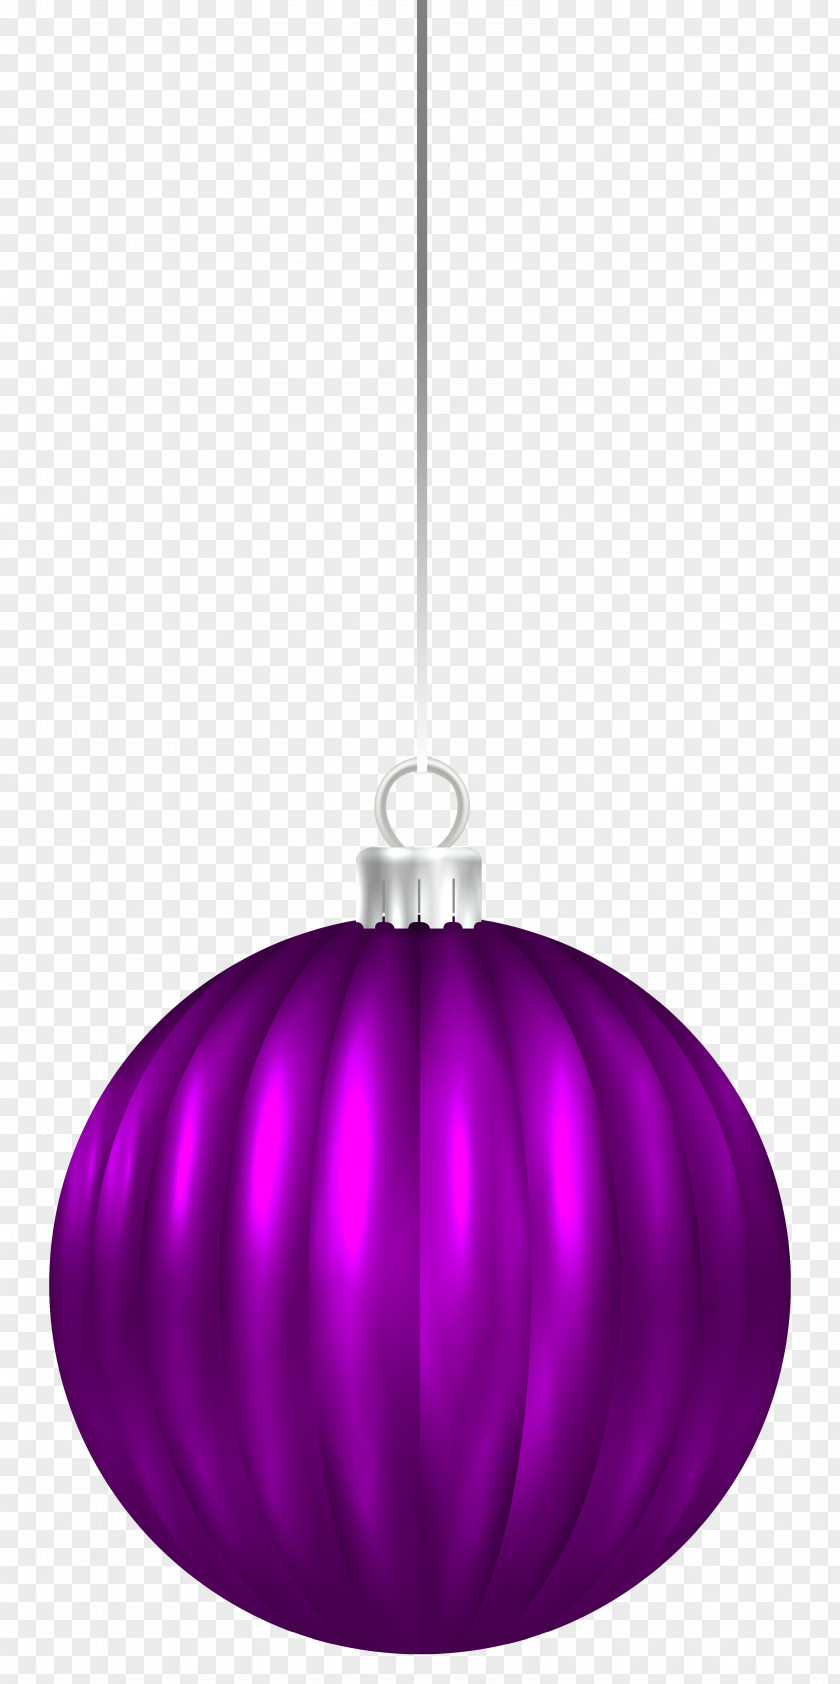 Purple Christmas Ball Ornament Clip Art Image Sphere Ceiling Light Fixture Pattern PNG